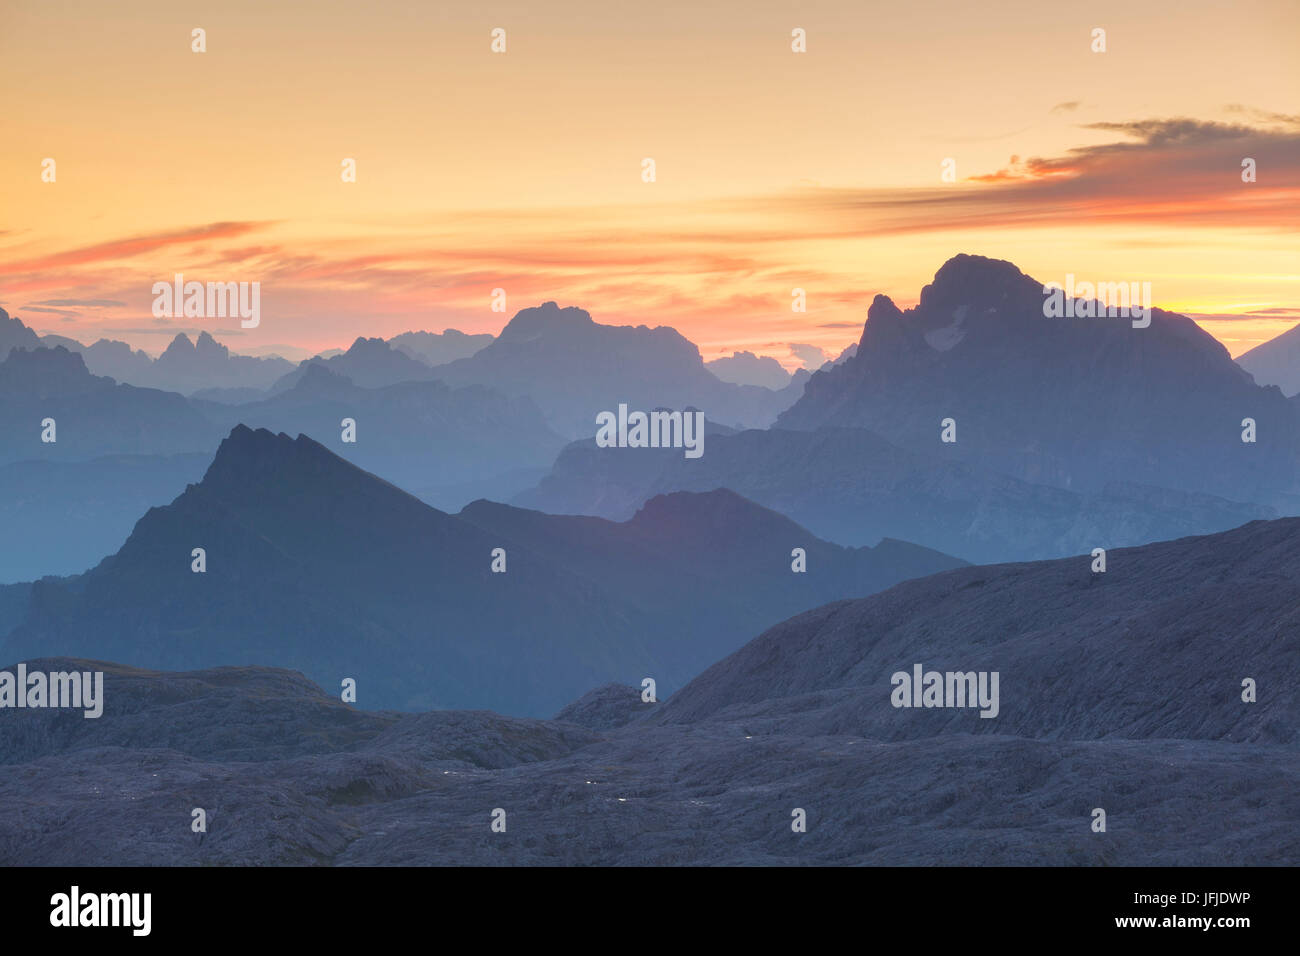 Rosetta mount, Plateau of Pale of San Martino, San Martino di Castrozza, Trento province, Dolomites, Trentino Alto Adige, Italy, Europe, Plateau at sunrise Stock Photo